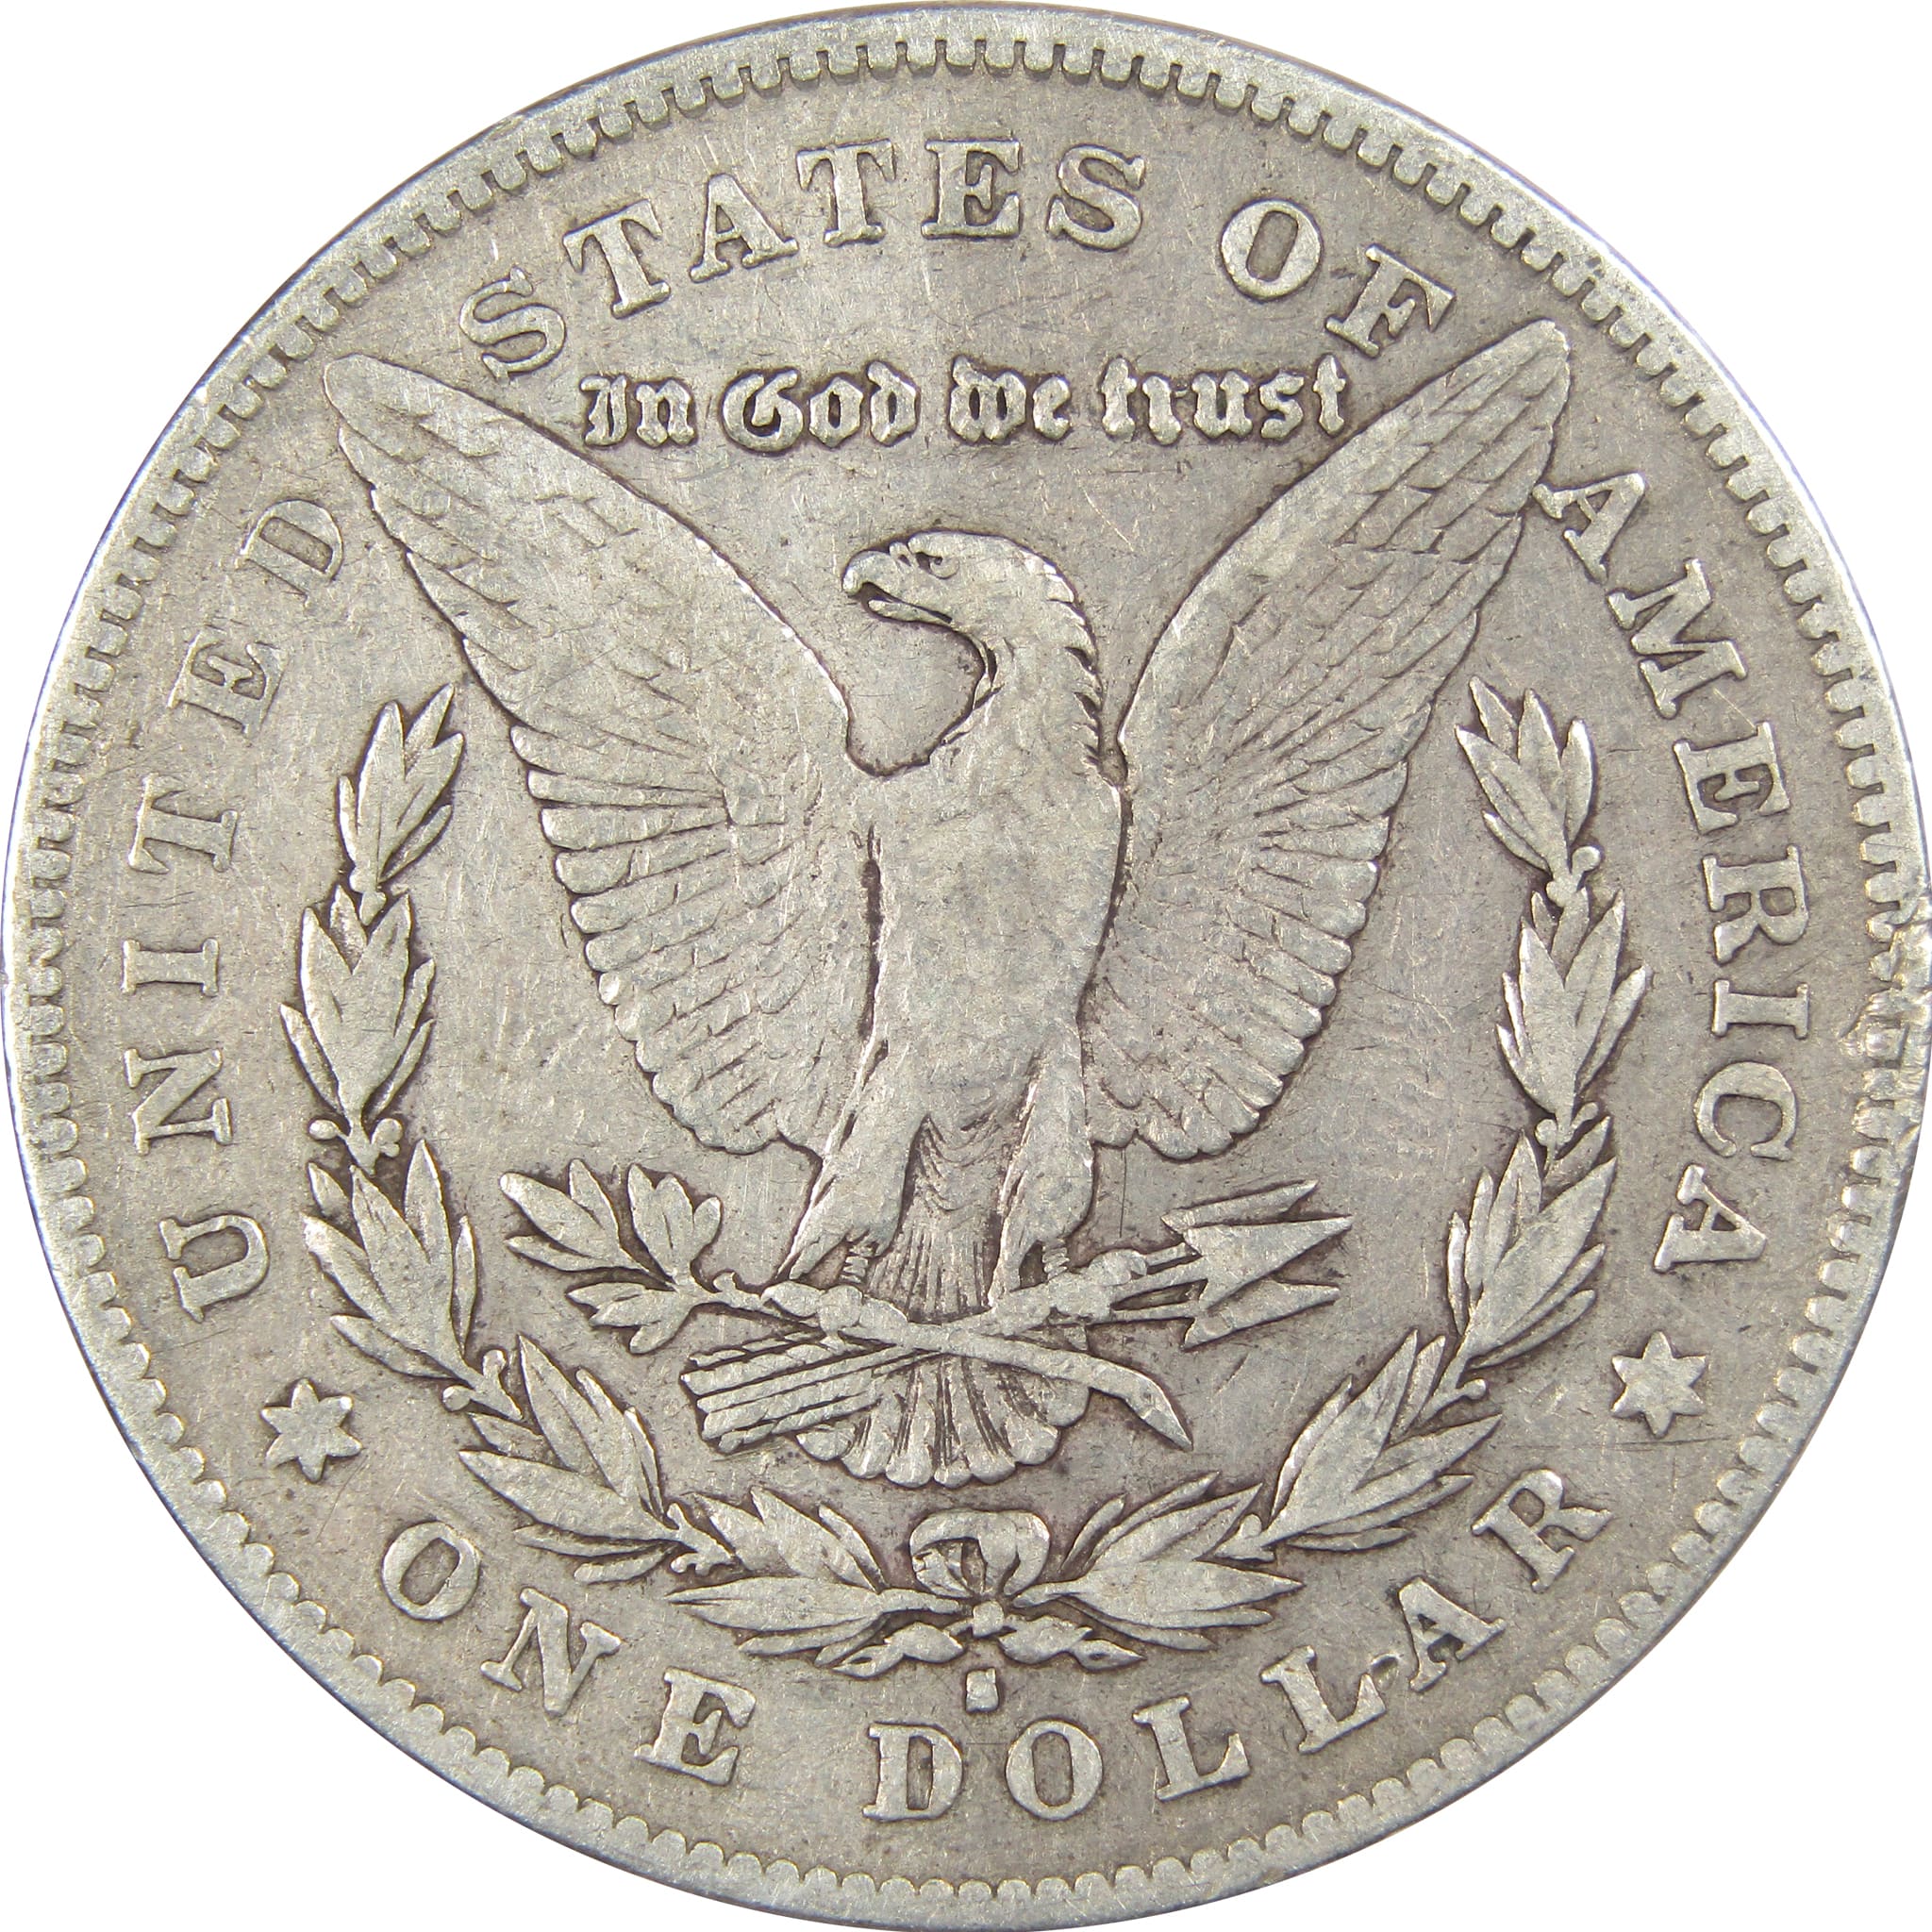 1879 S Rev 78 Morgan Dollar F Fine 90% Silver US Coin SKU:IPC7481 - Morgan coin - Morgan silver dollar - Morgan silver dollar for sale - Profile Coins &amp; Collectibles